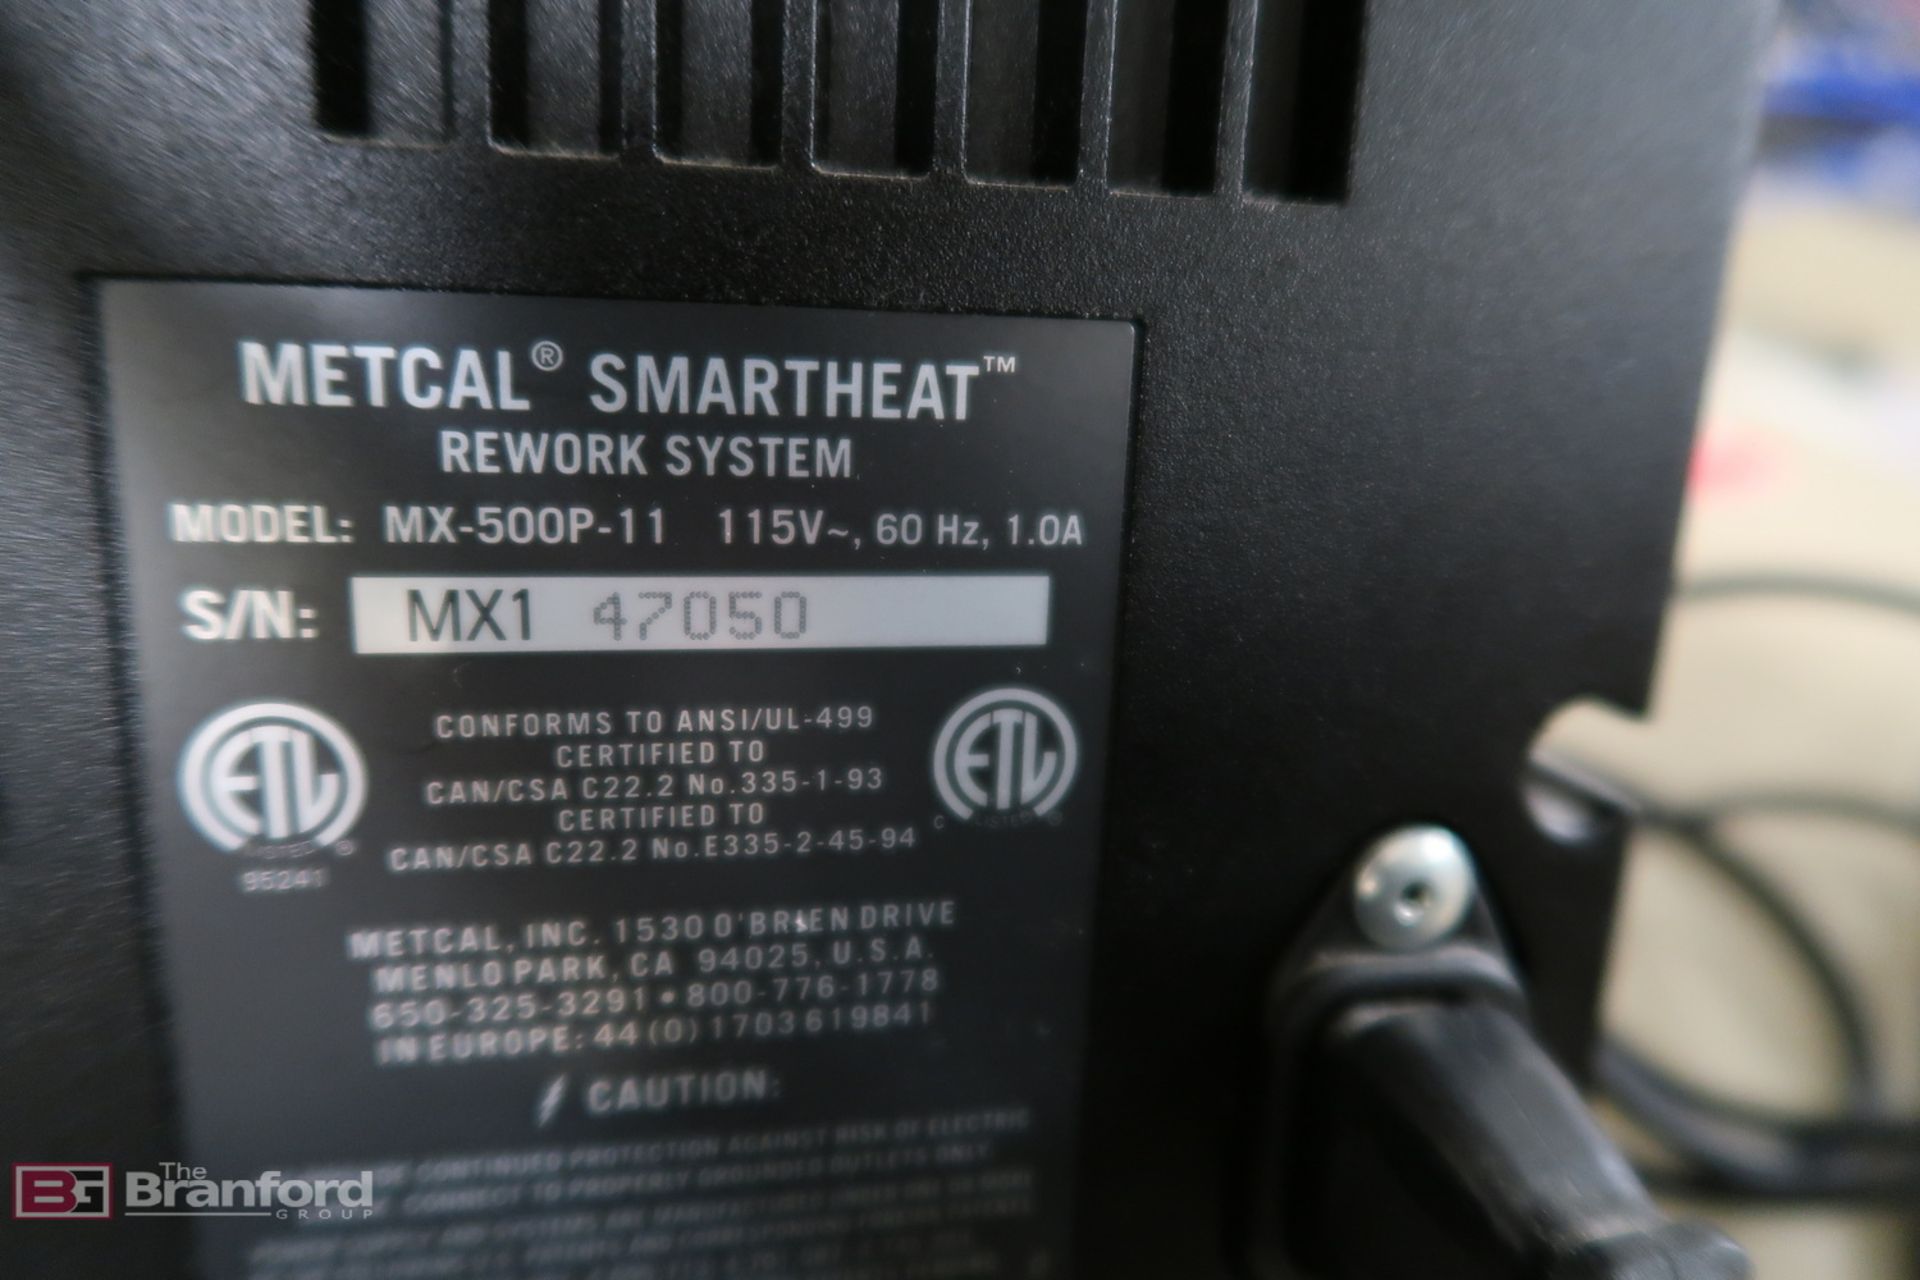 Metcal MX-500P-11 SmartHeat rework station - Image 2 of 2